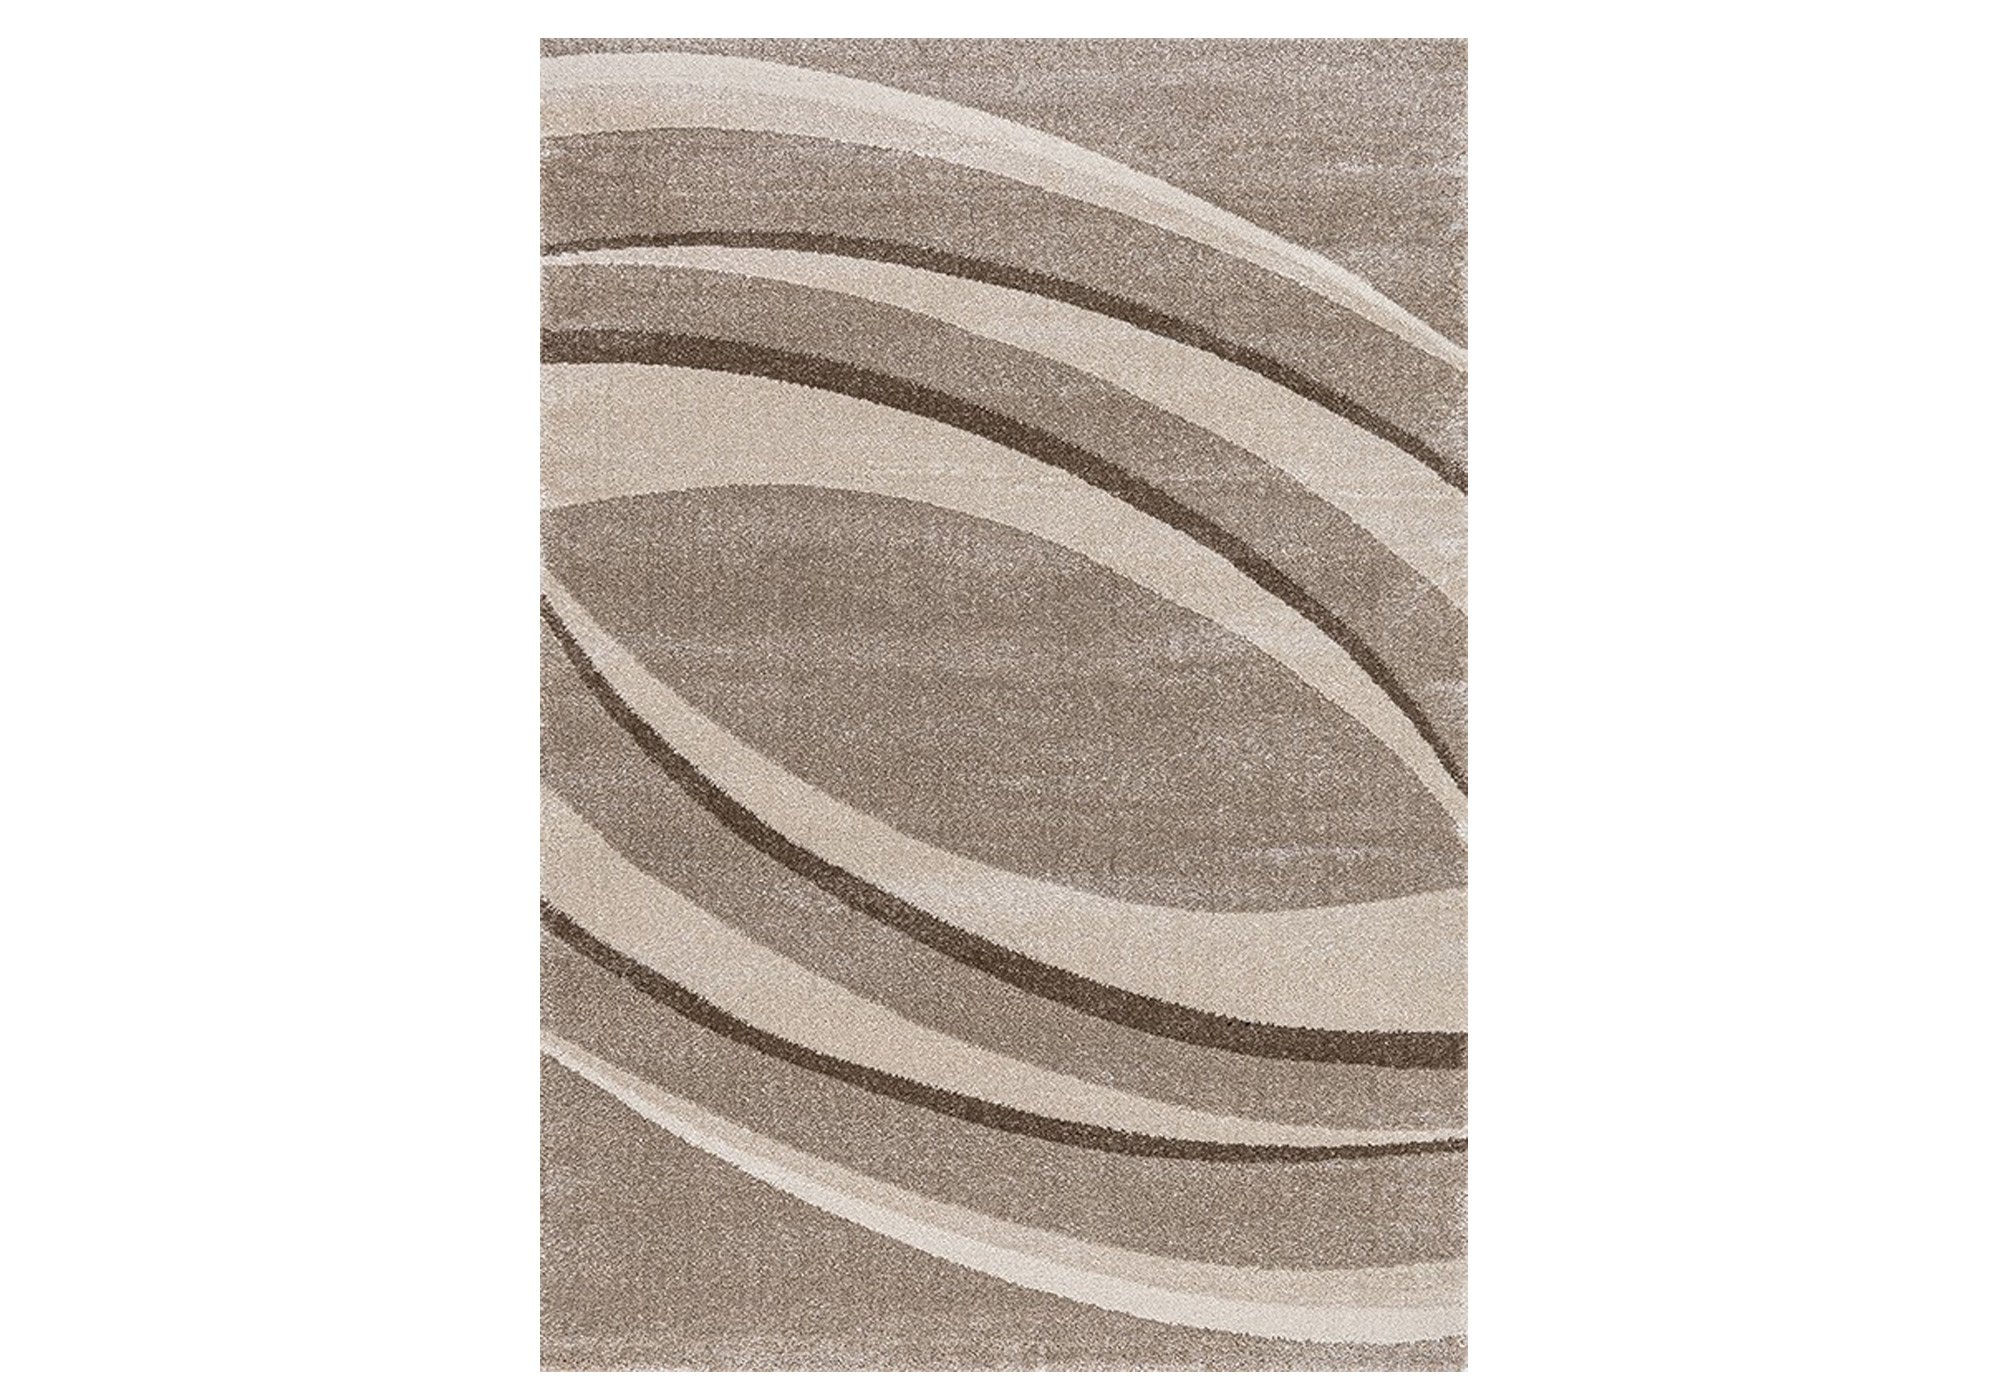 Festival Teppich 120 x 170 cm - beige - 11,5 mm Höhe - Relax 230